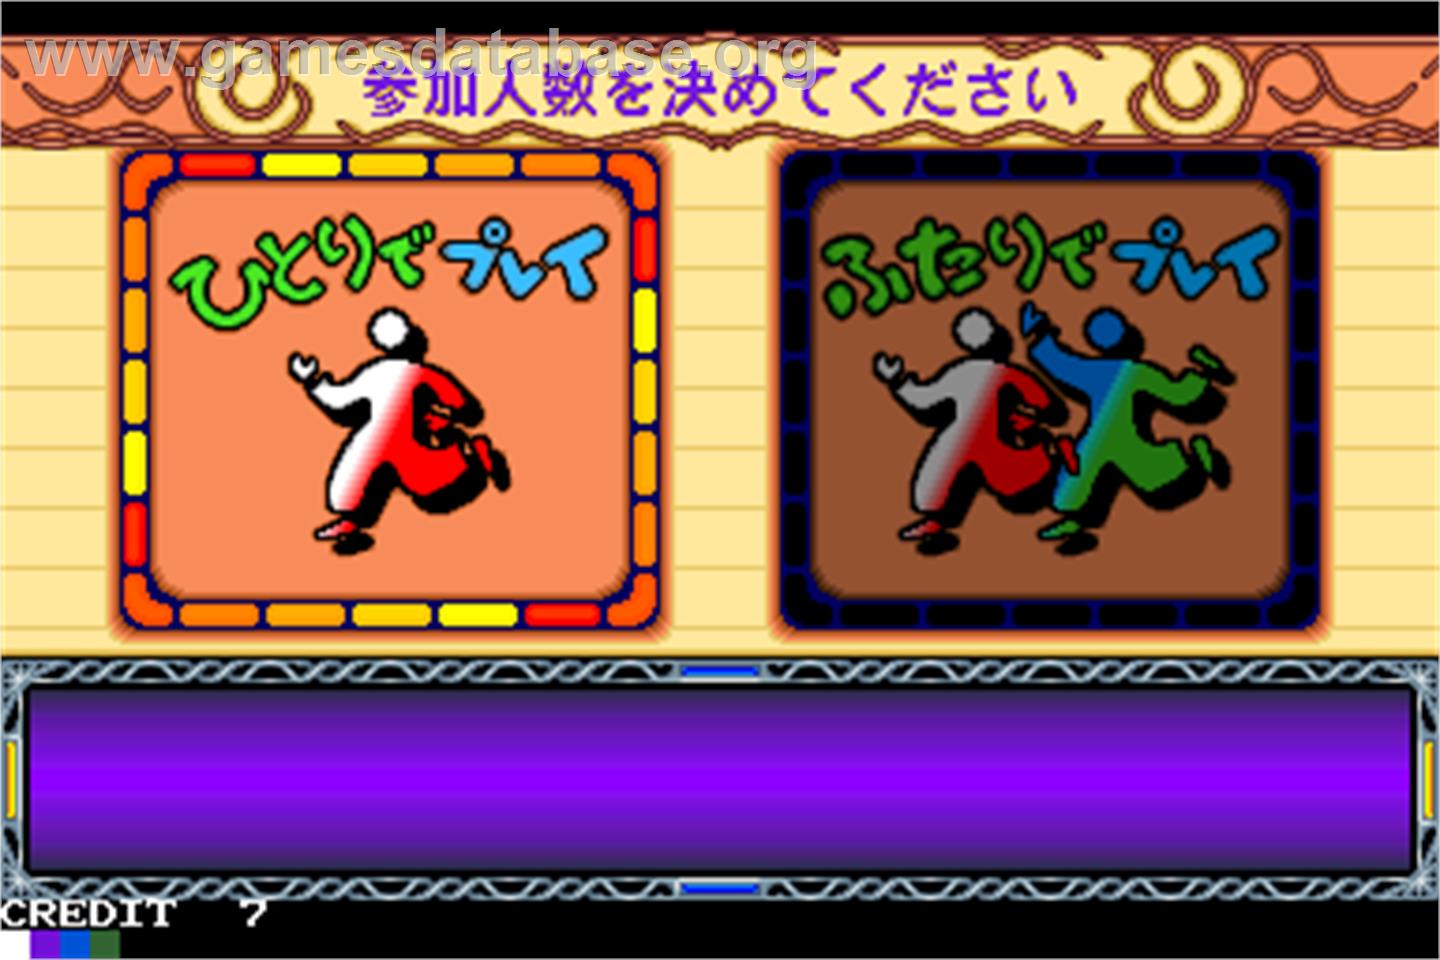 Seimei-Kantei-Meimei-Ki Cult Name - Arcade - Artwork - Title Screen